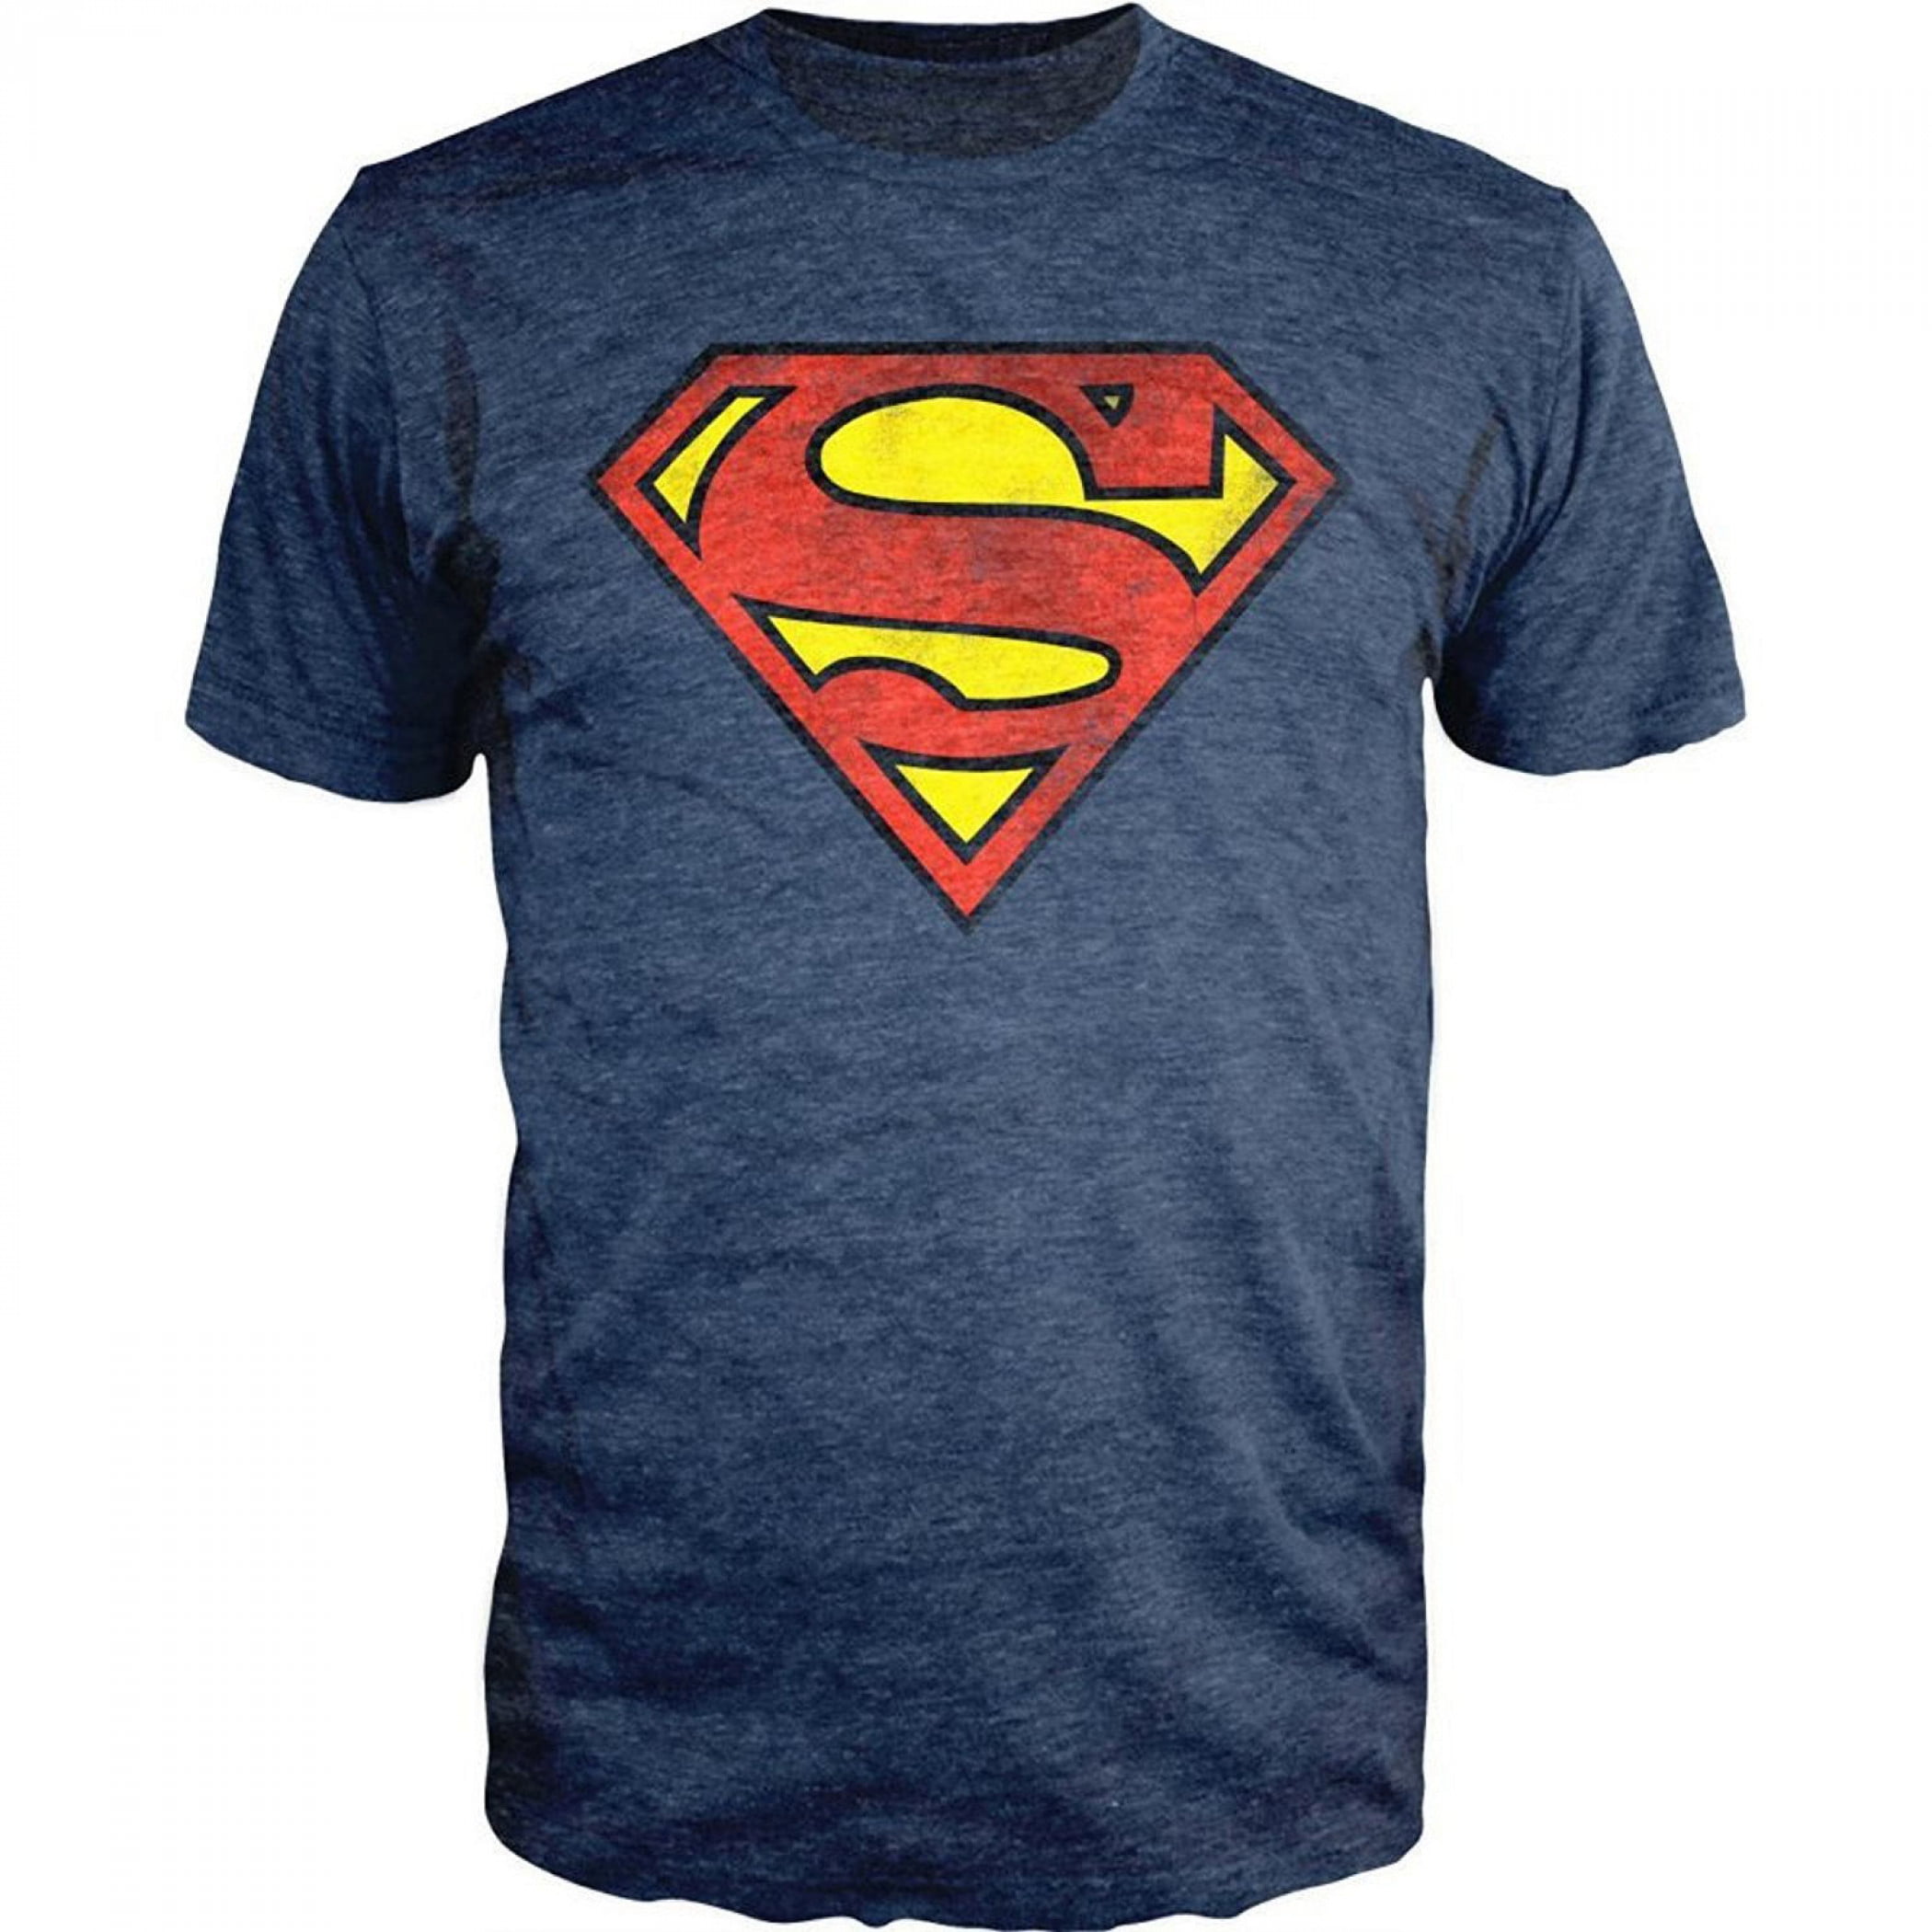 Superman Man of Steel half face inspired adult t-shirt